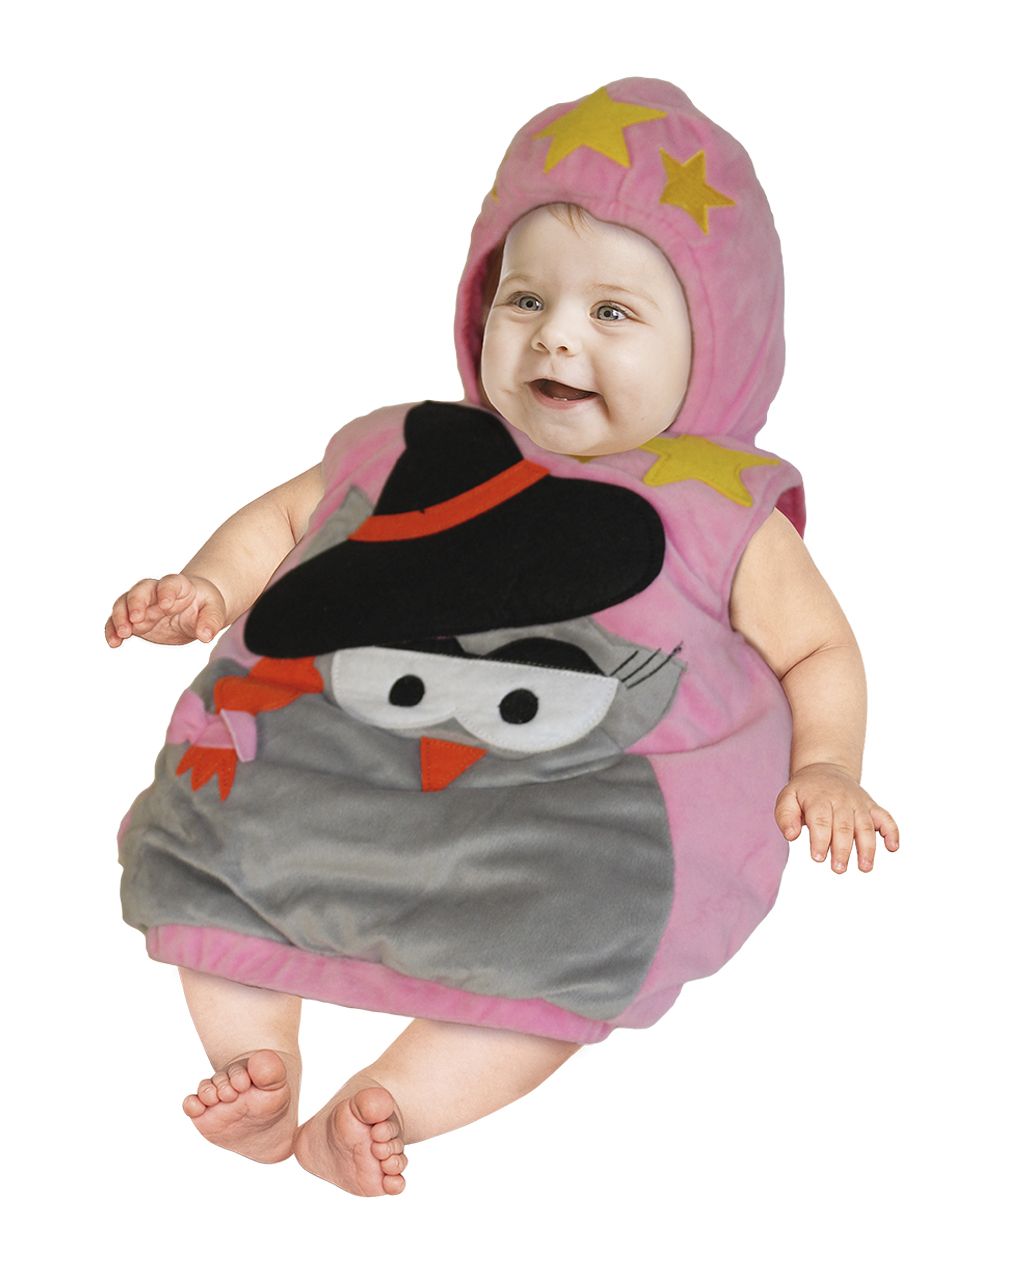 Estrega de traje bebé 0-12 meses - rainha do carnaval - Carnaval Queen, Carnival Queen